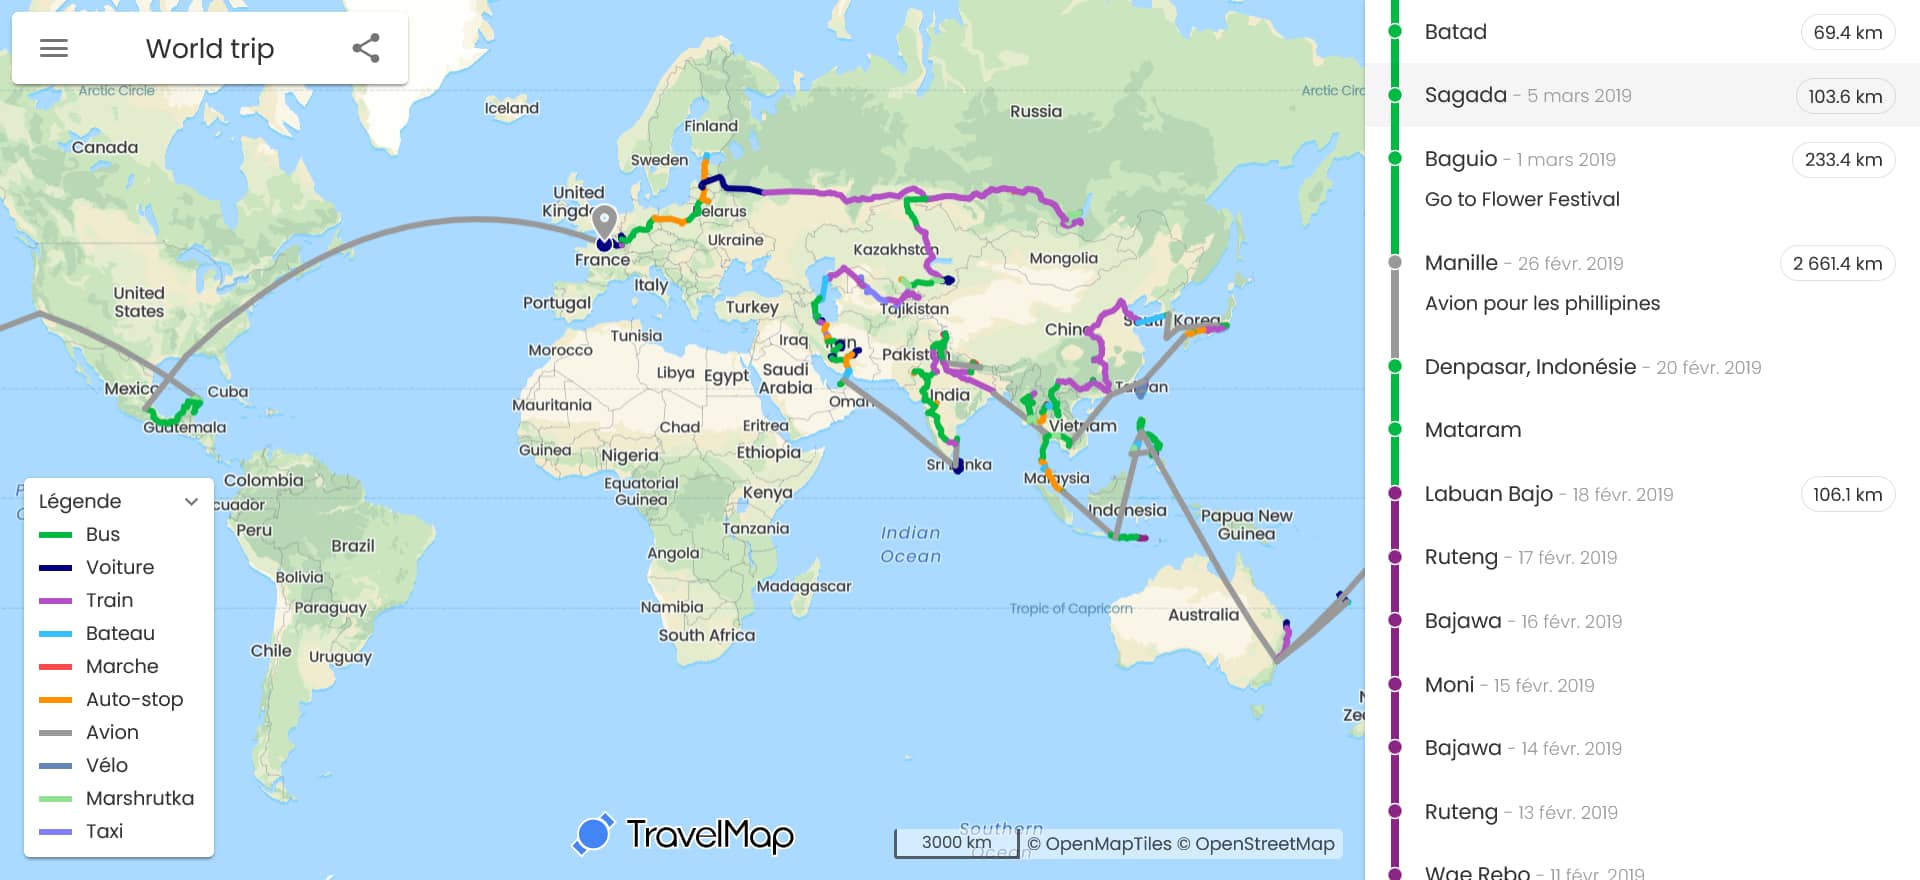 Slow traveling around the world